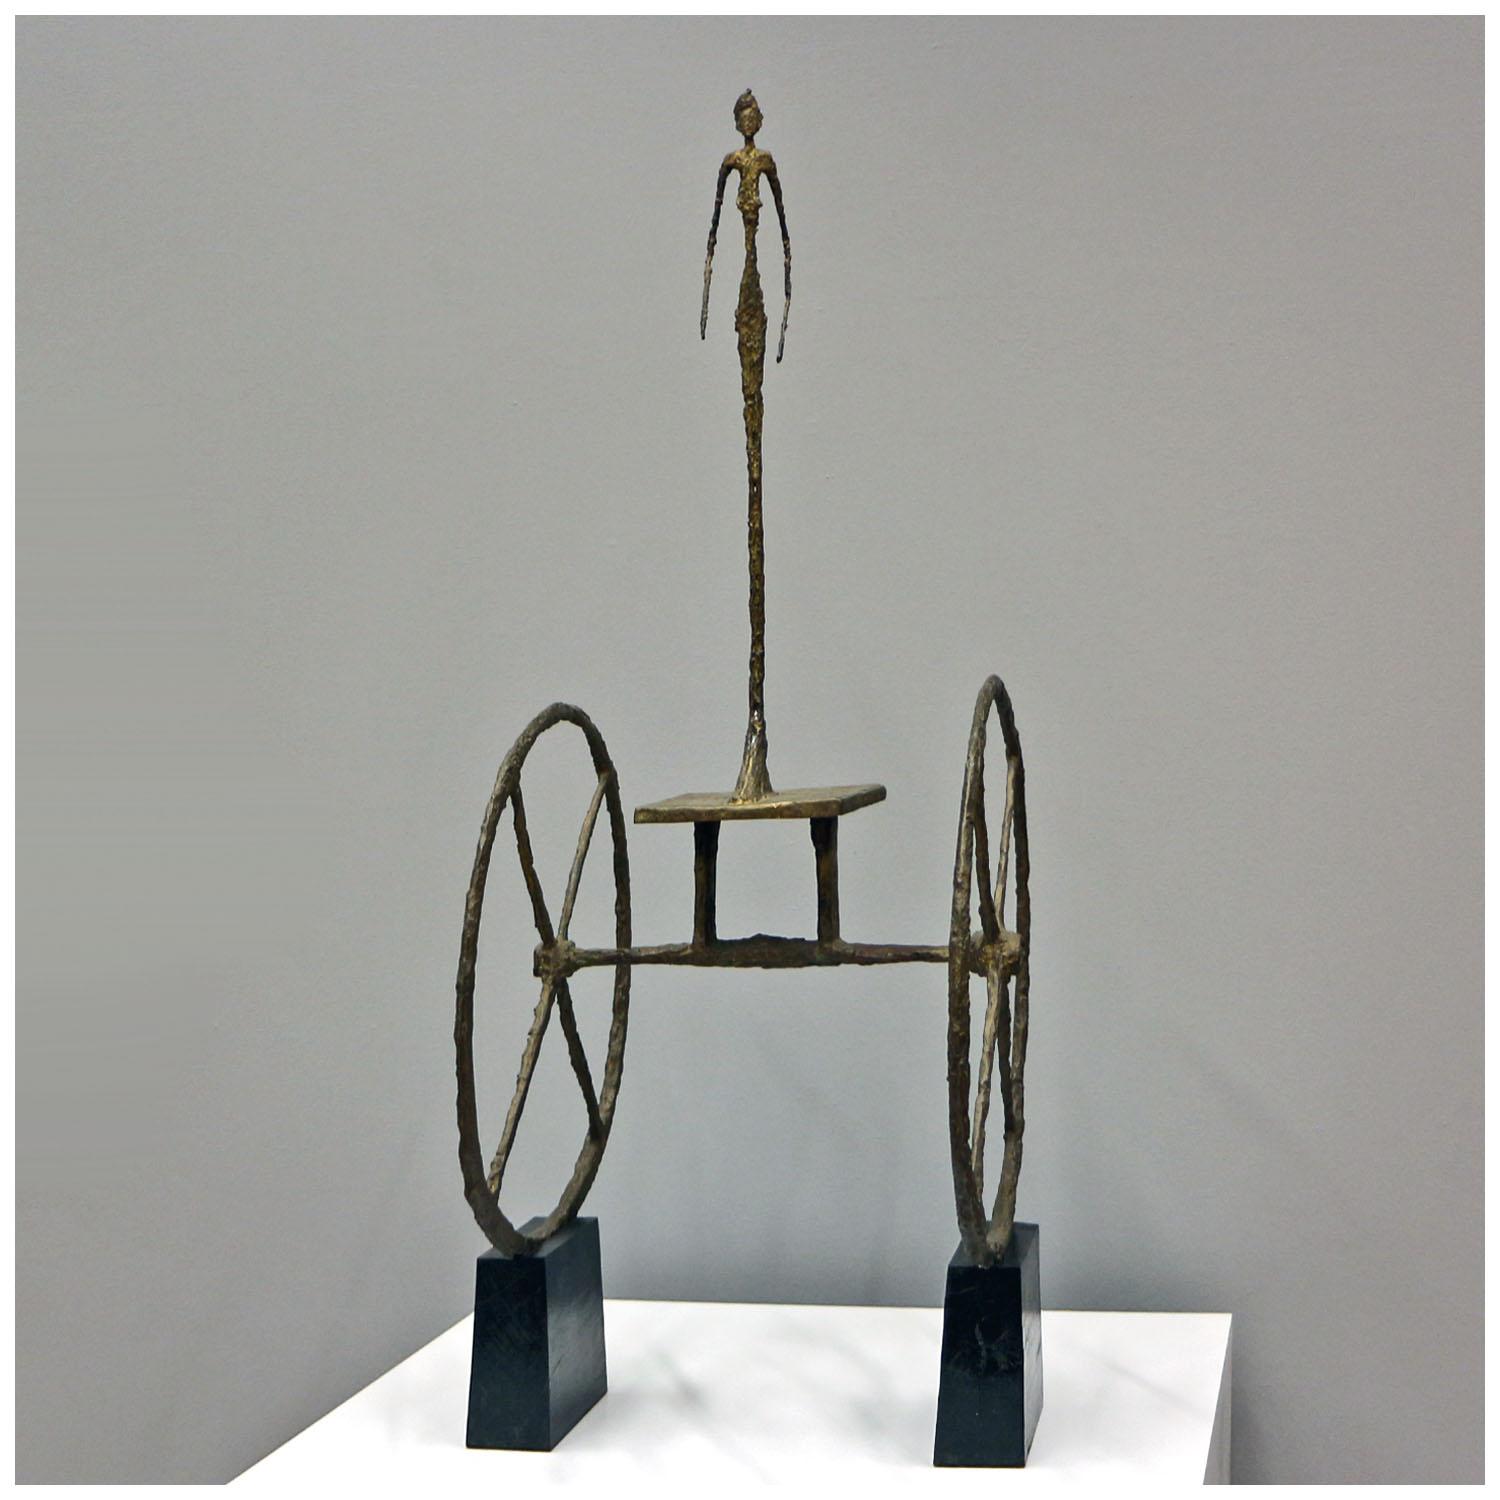 Alberto Giacometti. The Chariot. 1950. Kunsthaus Zurich